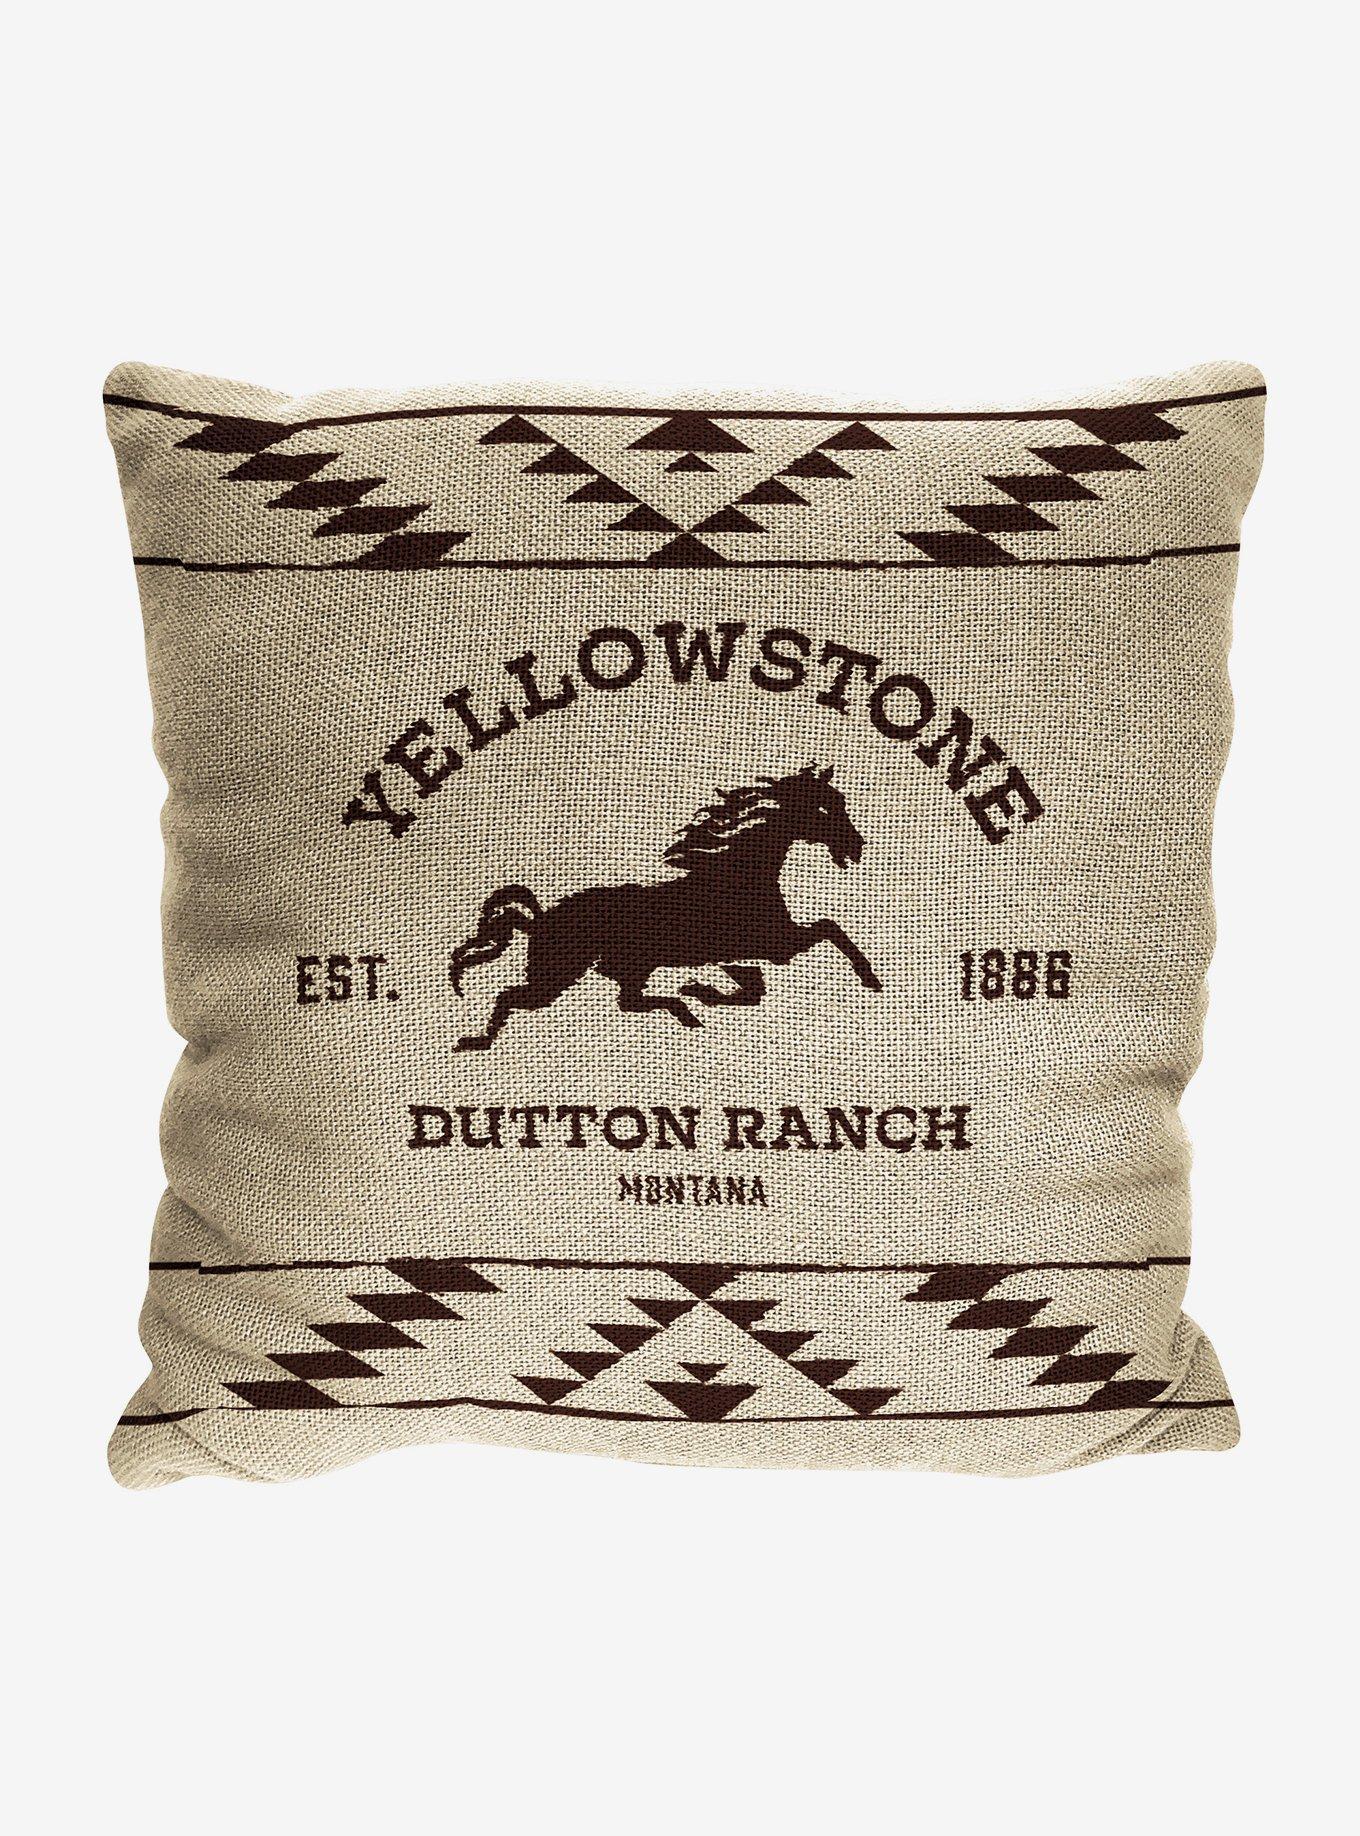 Yellowstone Dutton Ranch Woven Jacquard Pillow